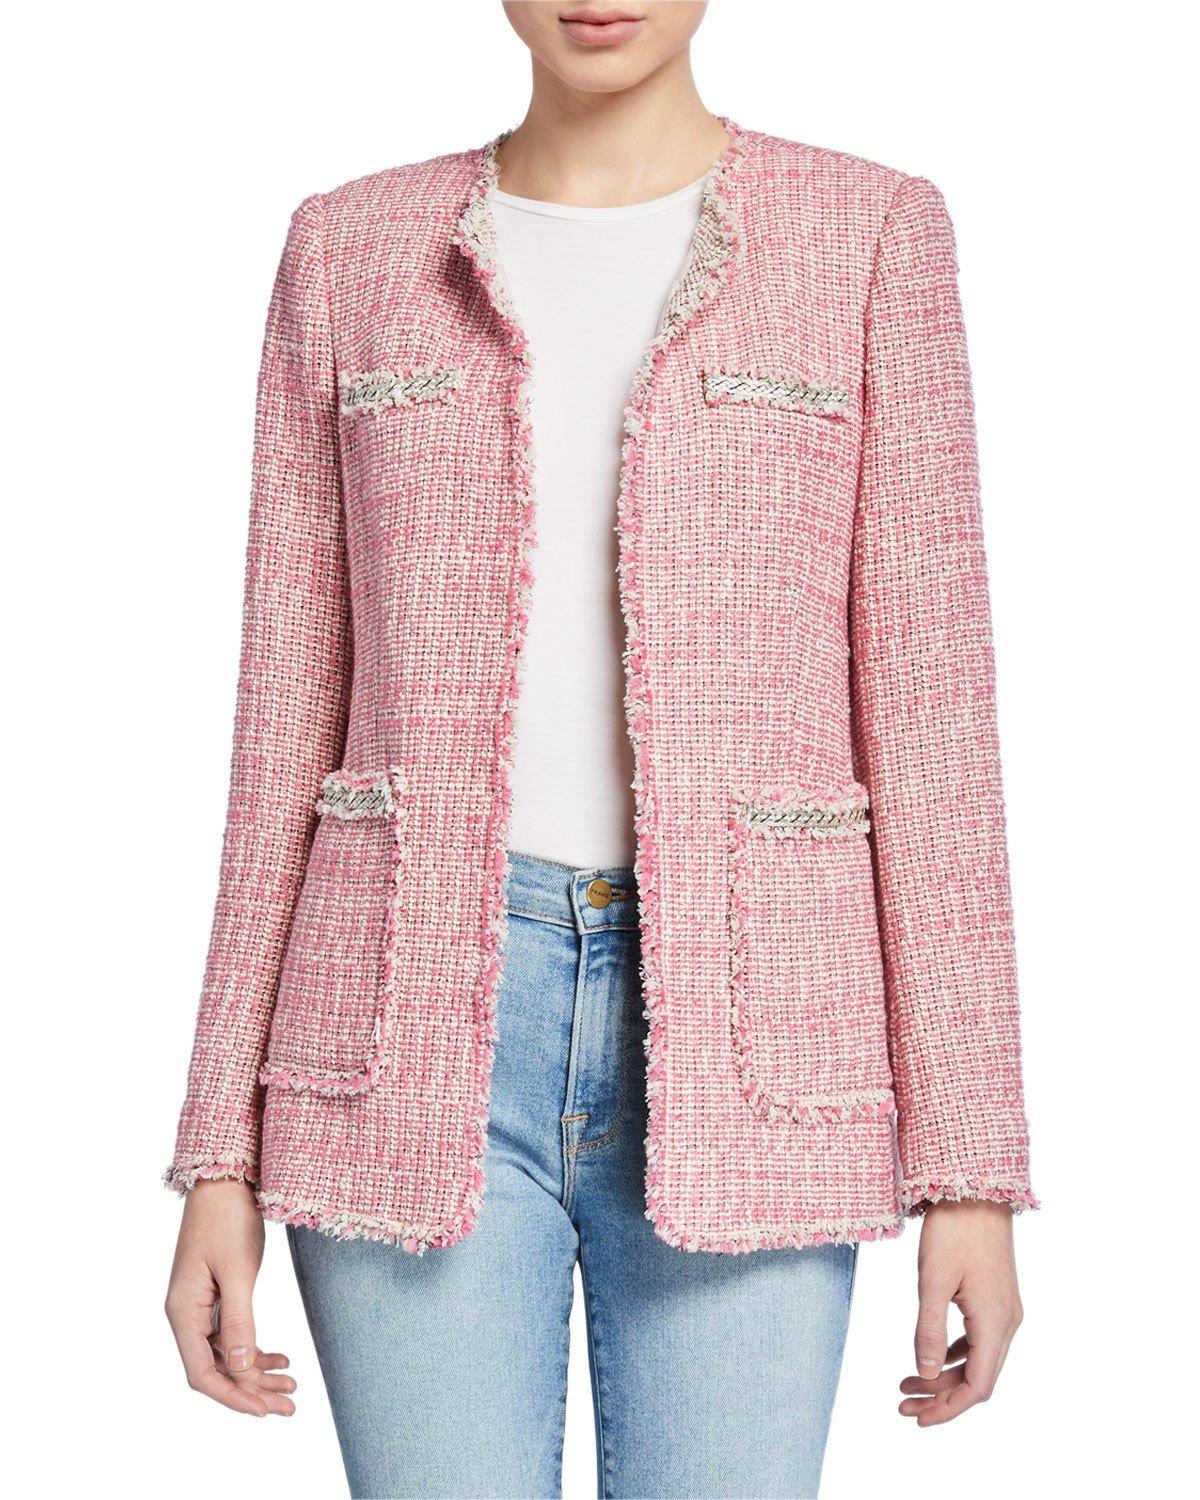 Rebecca Taylor Collarless Tweed Jacket in Pink - Lyst